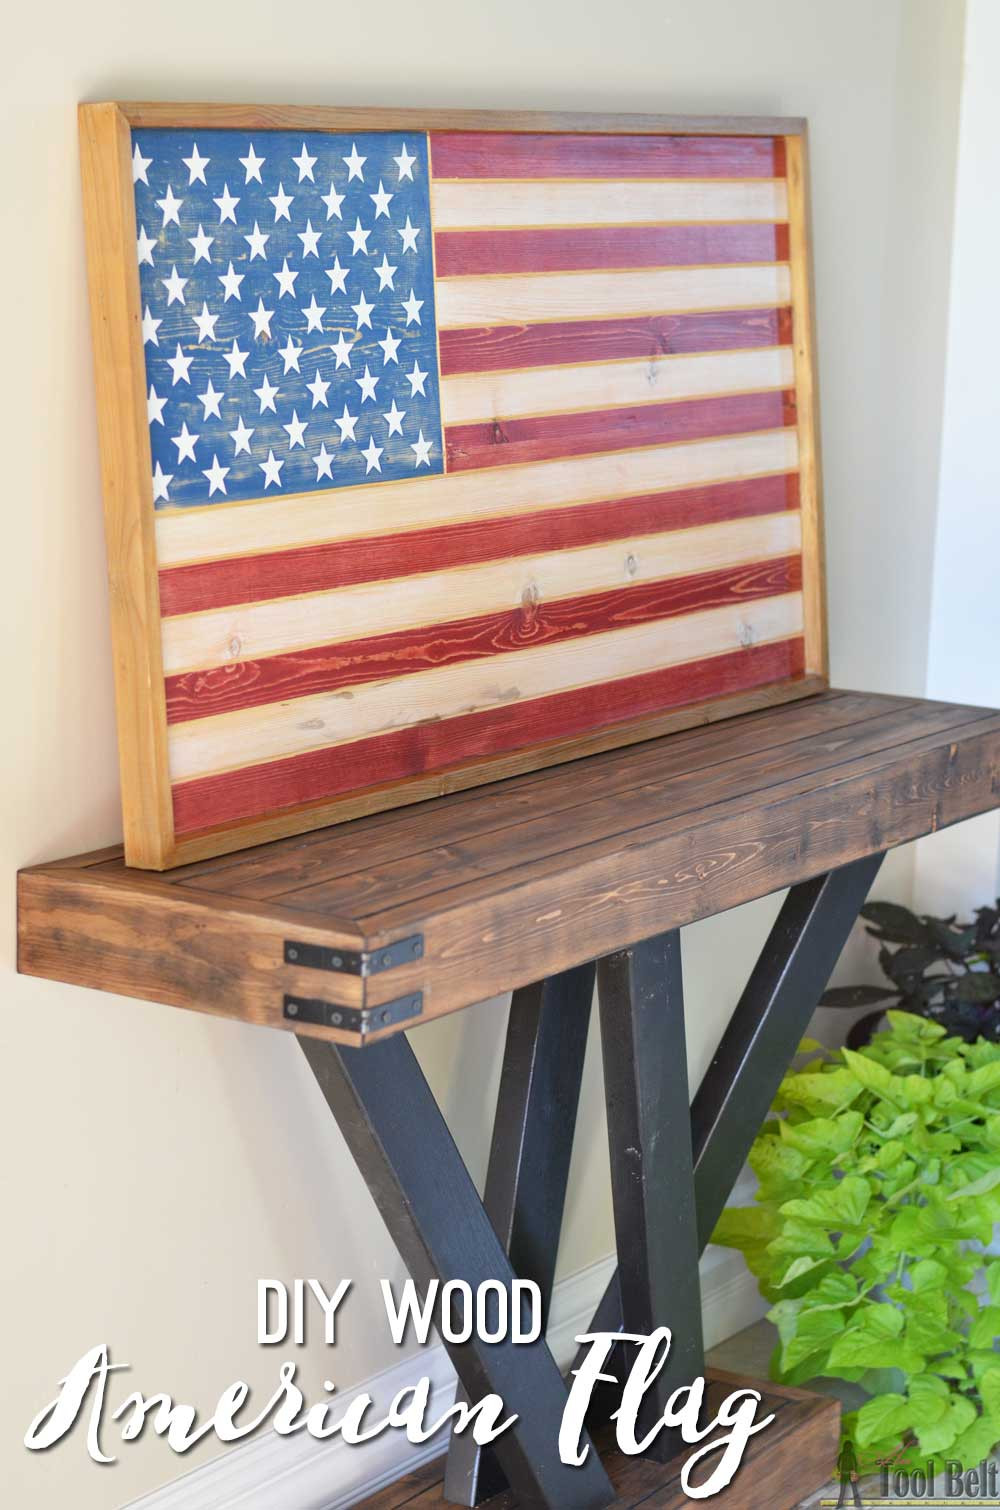 Best ideas about DIY Wood American Flag
. Save or Pin DIY Patriotic Wood Flag Her Tool Belt Now.